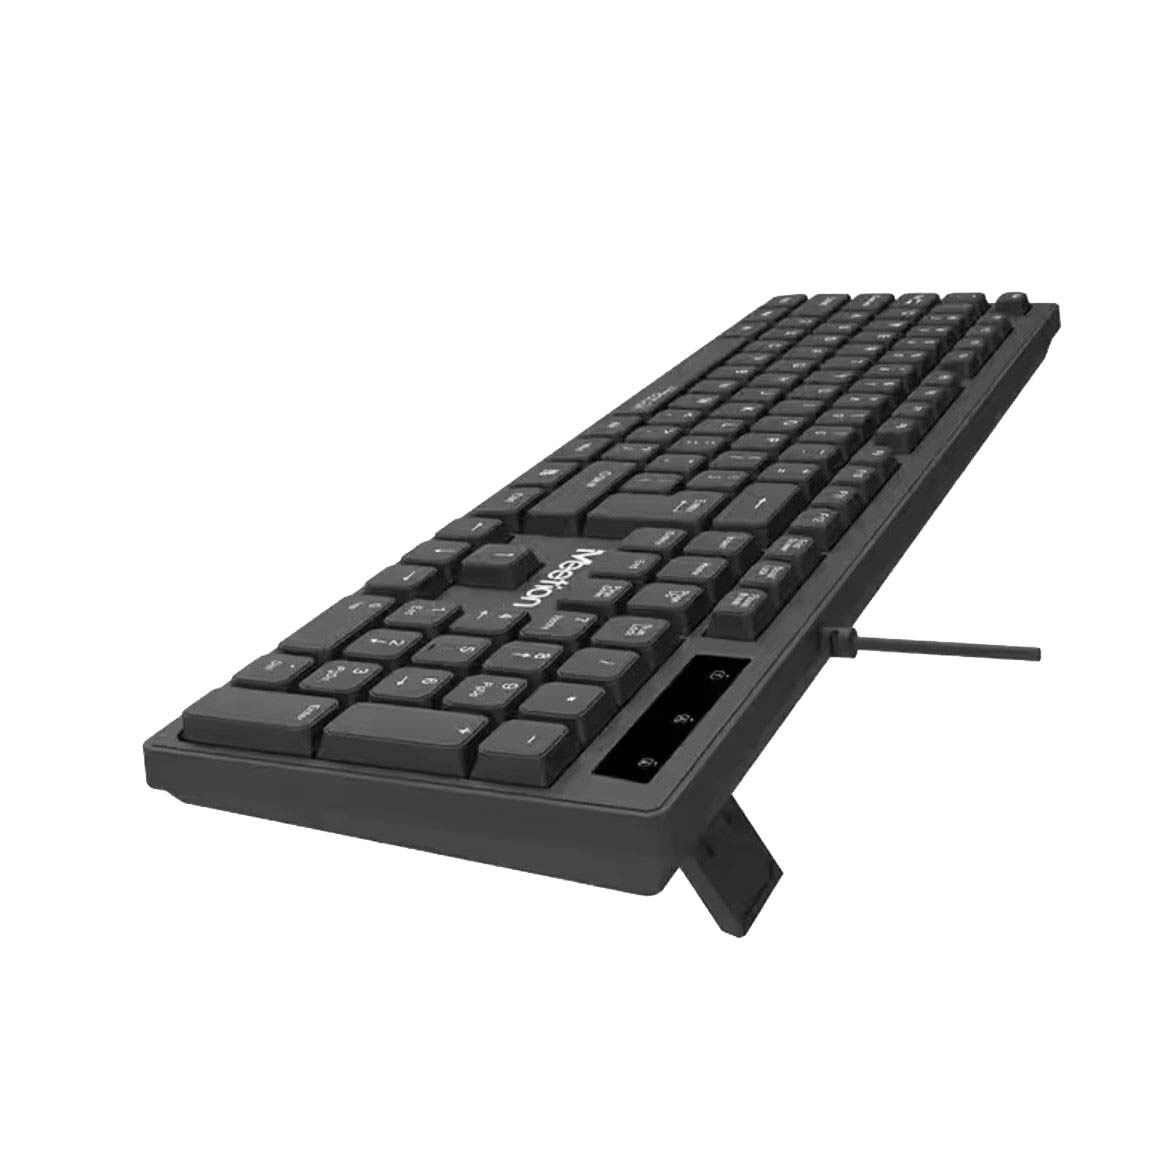 Meetion MT-K300 Standard USB Wired Keyboard